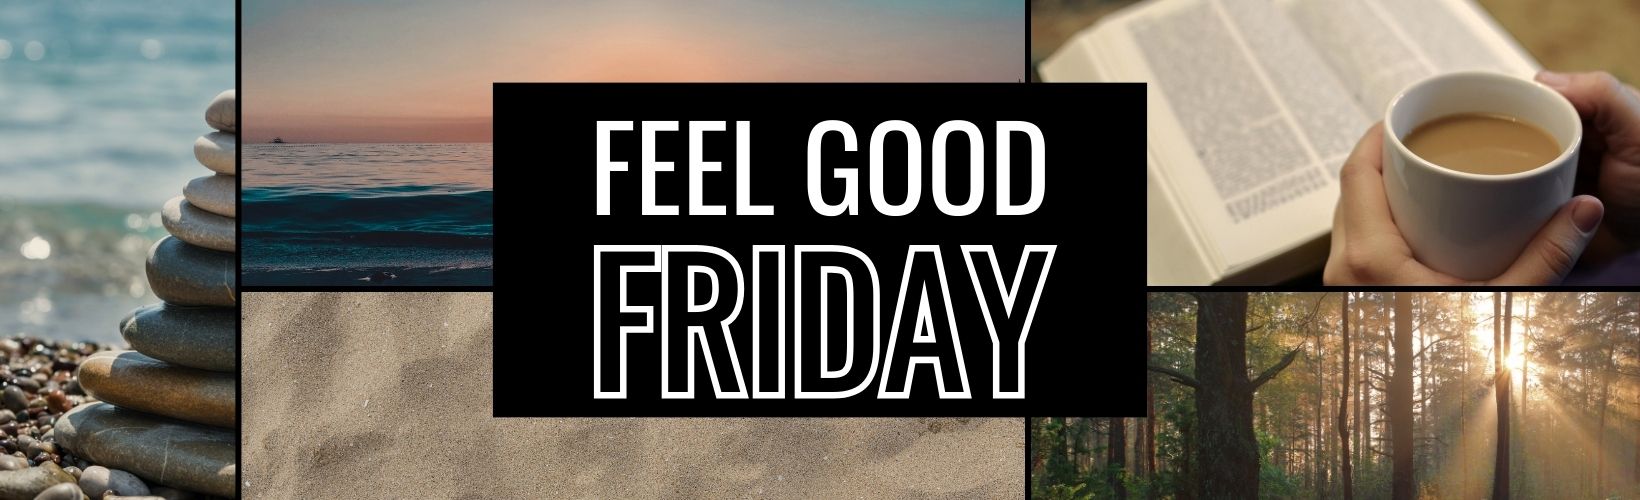 Feel Good Friday: Cultivating Positivity